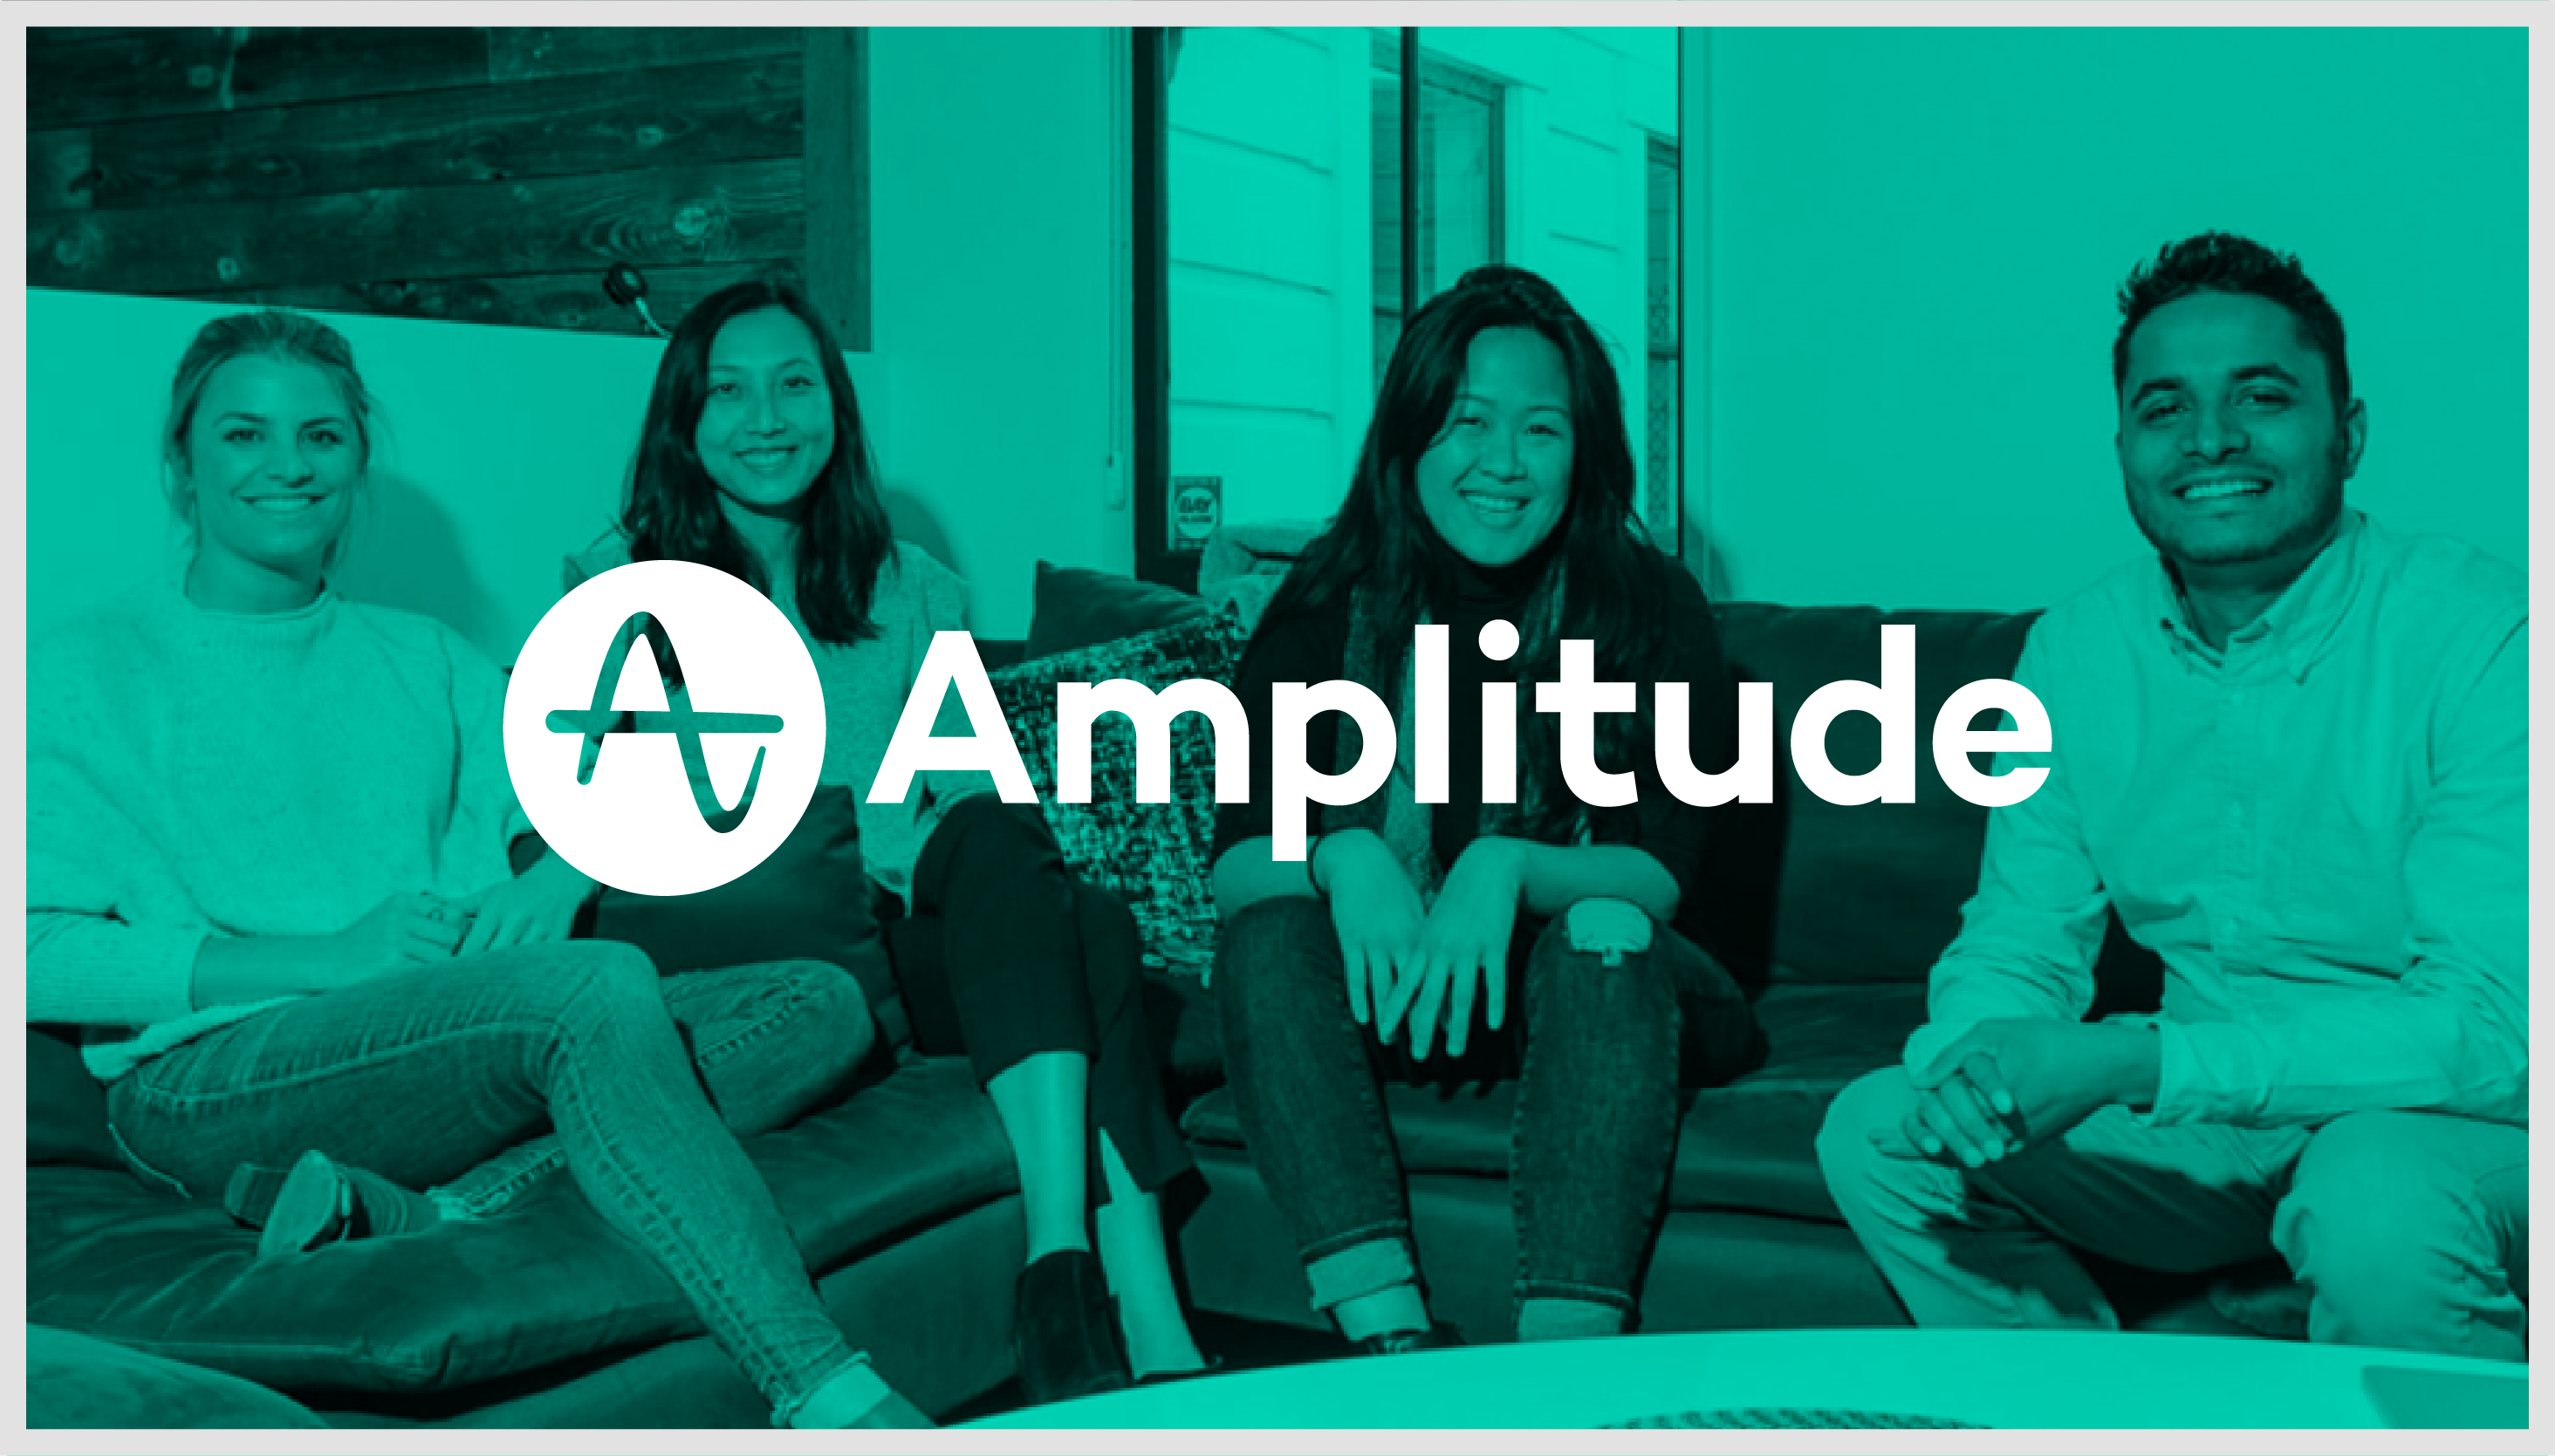 Amplitude logo over a photograph of a diverse group of employees